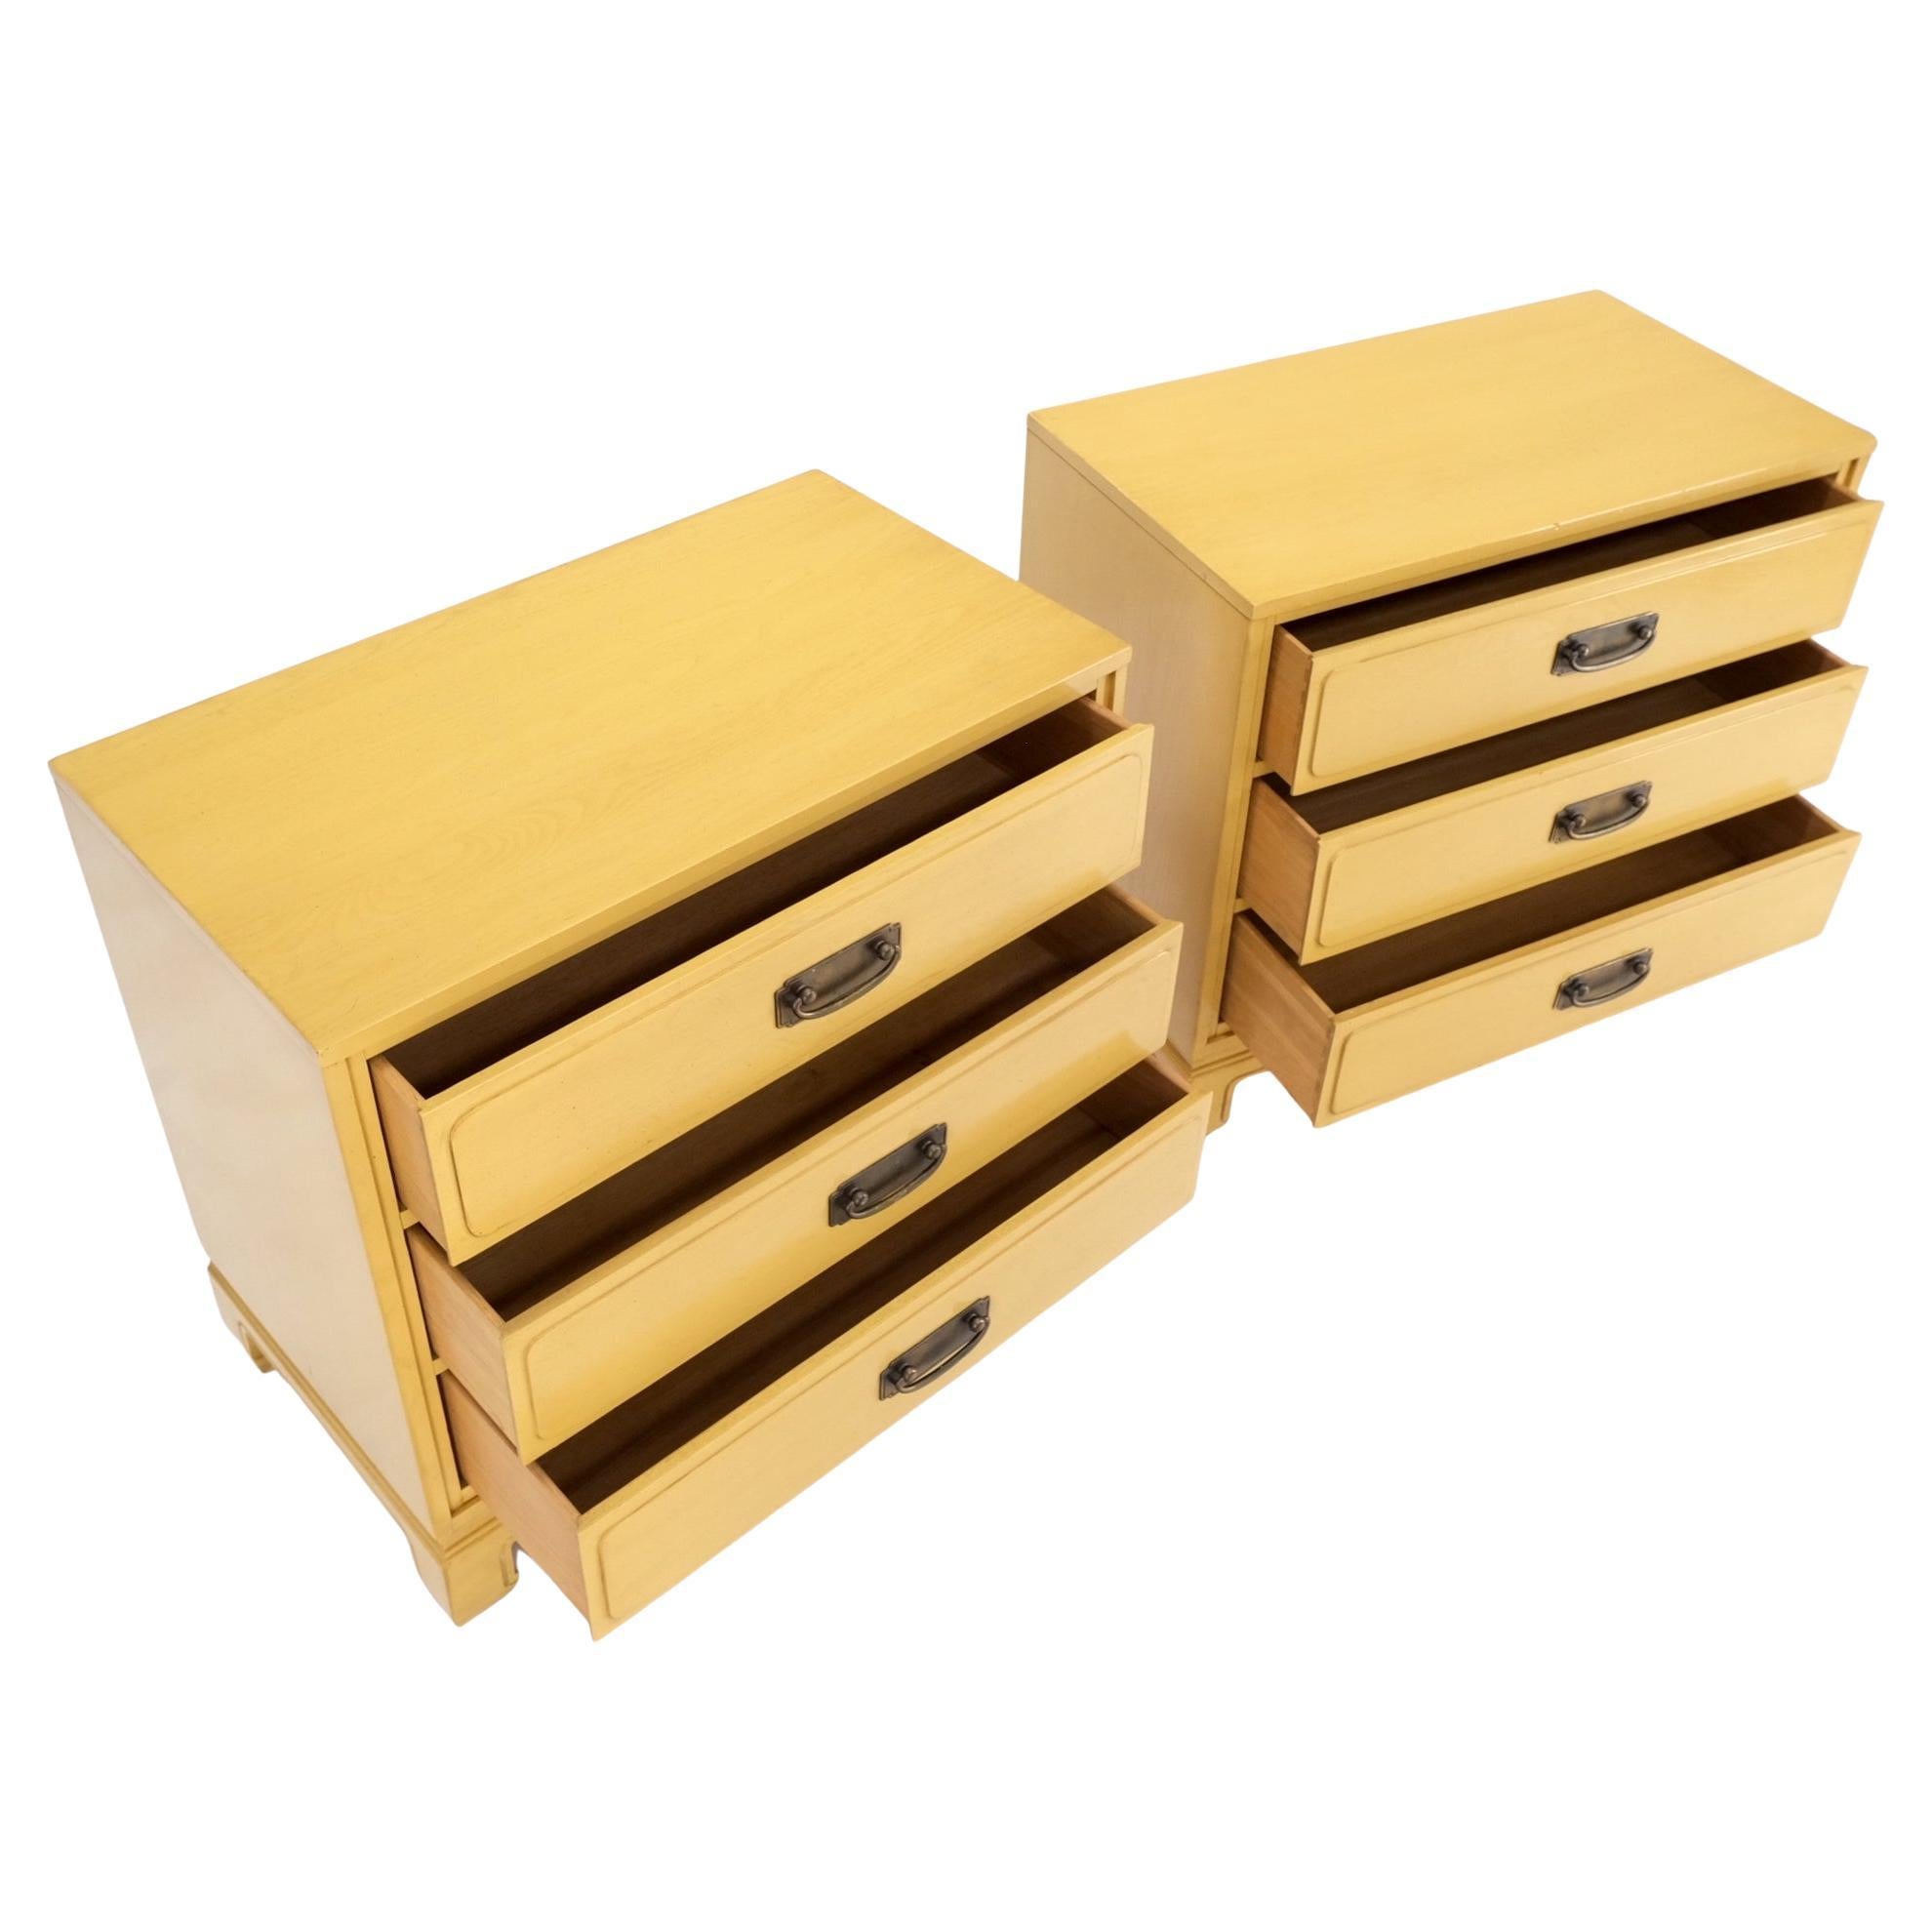 Paire de tirettes Davis Mid-Century Modern jaune citron 3 tiroirs bachelor chests large nigthstands cabinets consoles.